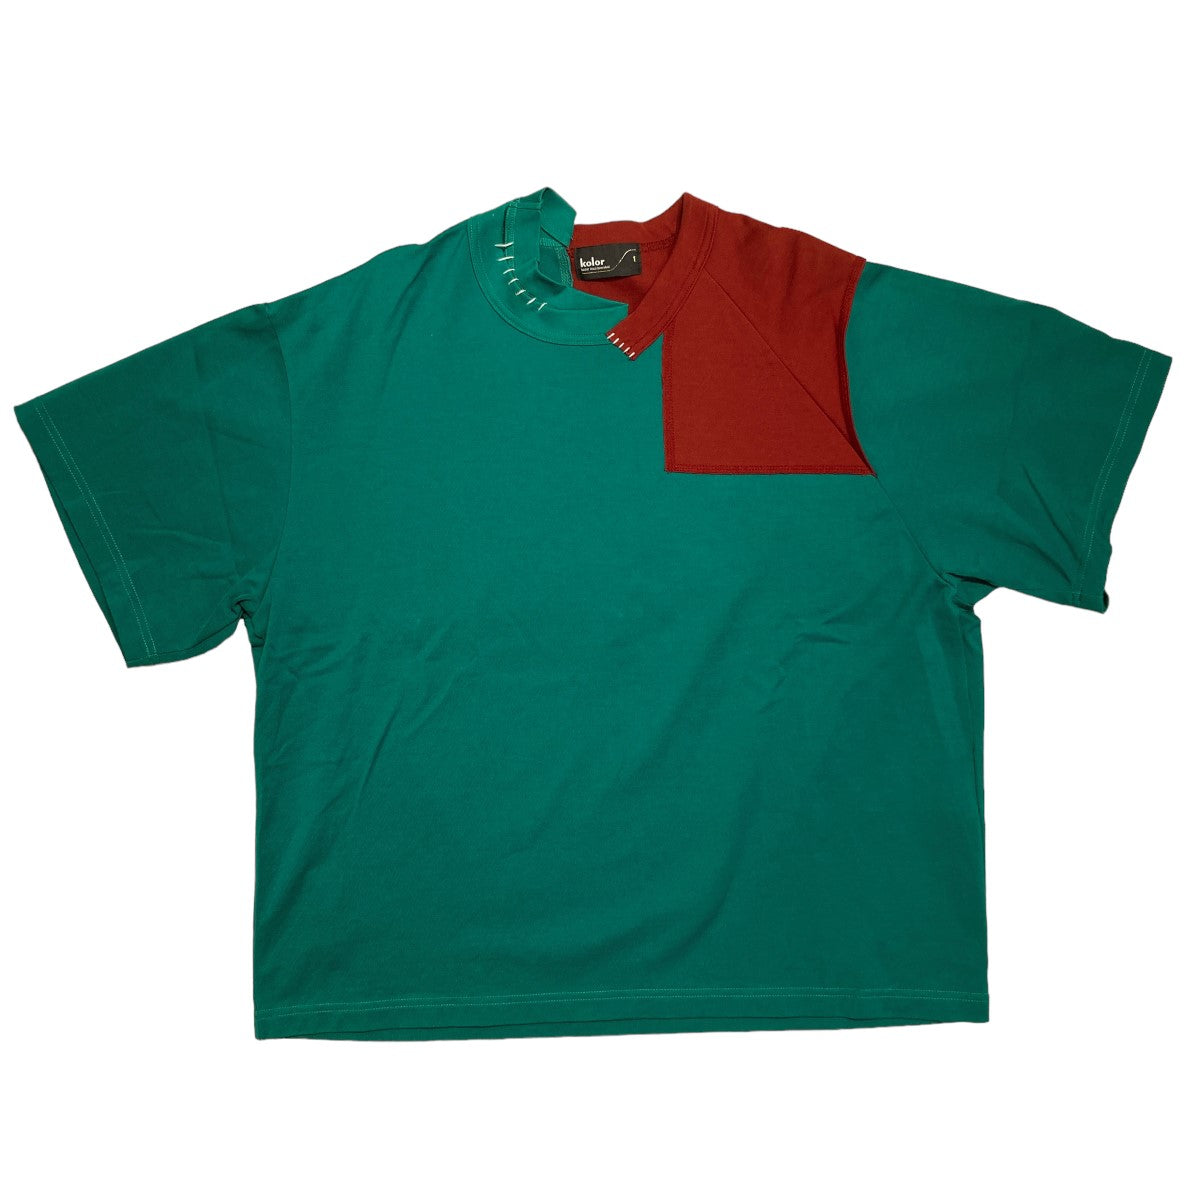 kolor(カラー) 2021SS ドッキング 半袖Tシャツ／21scm-t04203 21scm ...